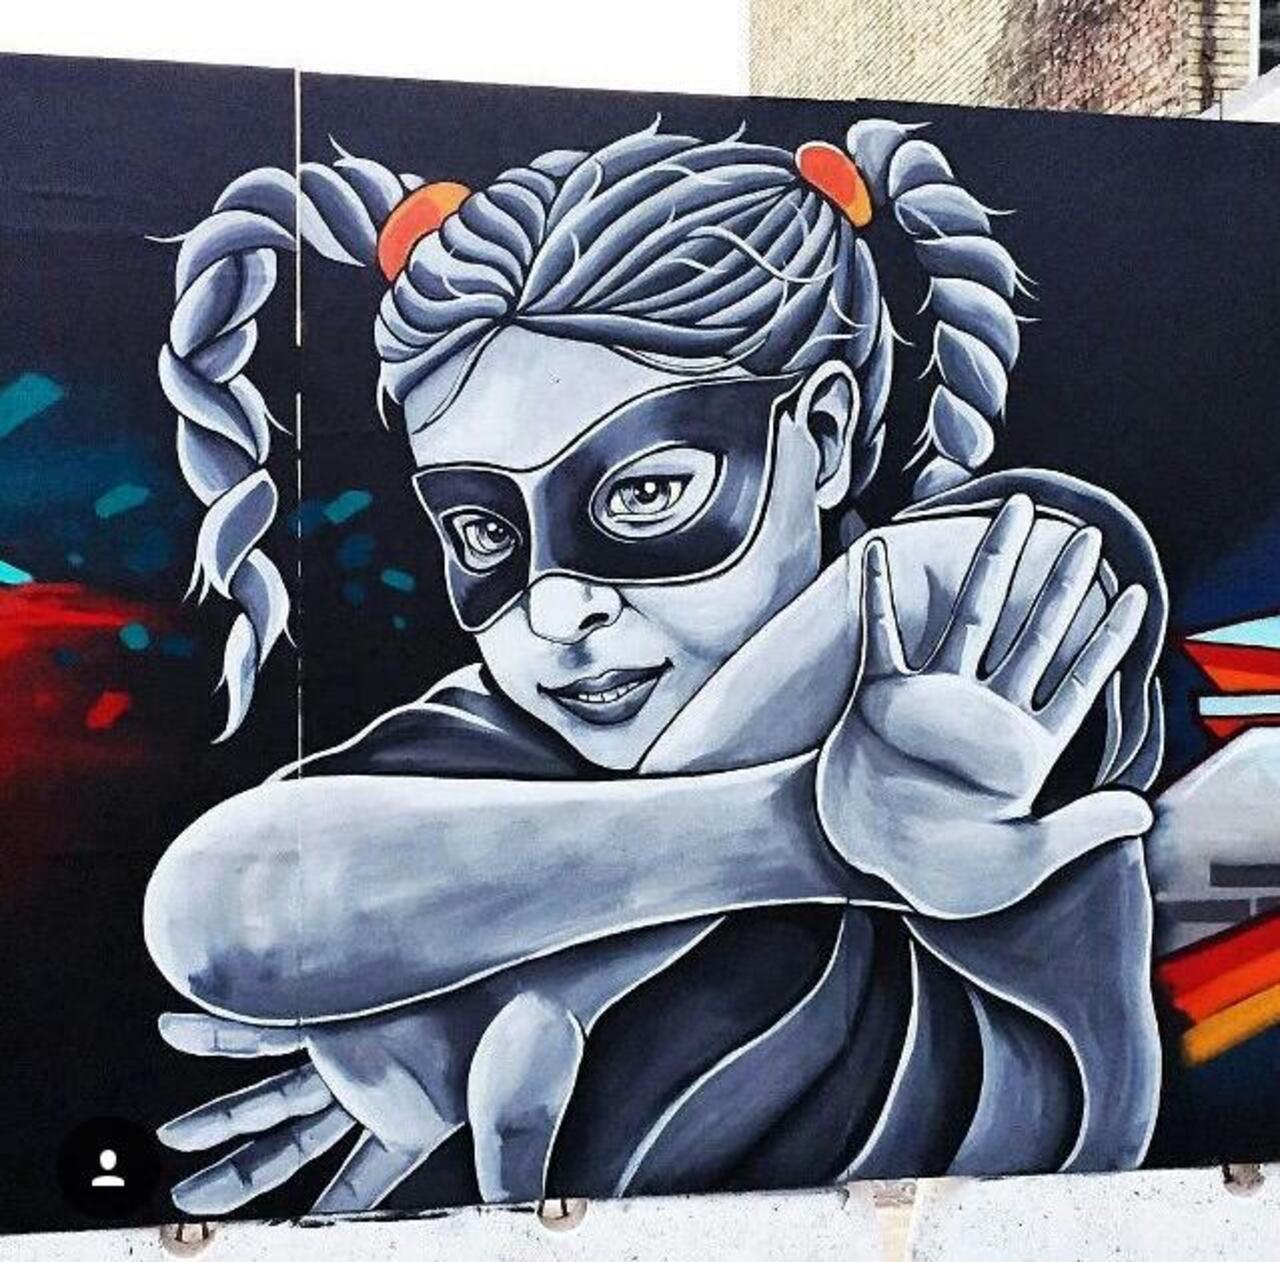 Street Art by Stinehvid 

#art #graffiti #mural #streetart http://t.co/7xzGMwn6nU